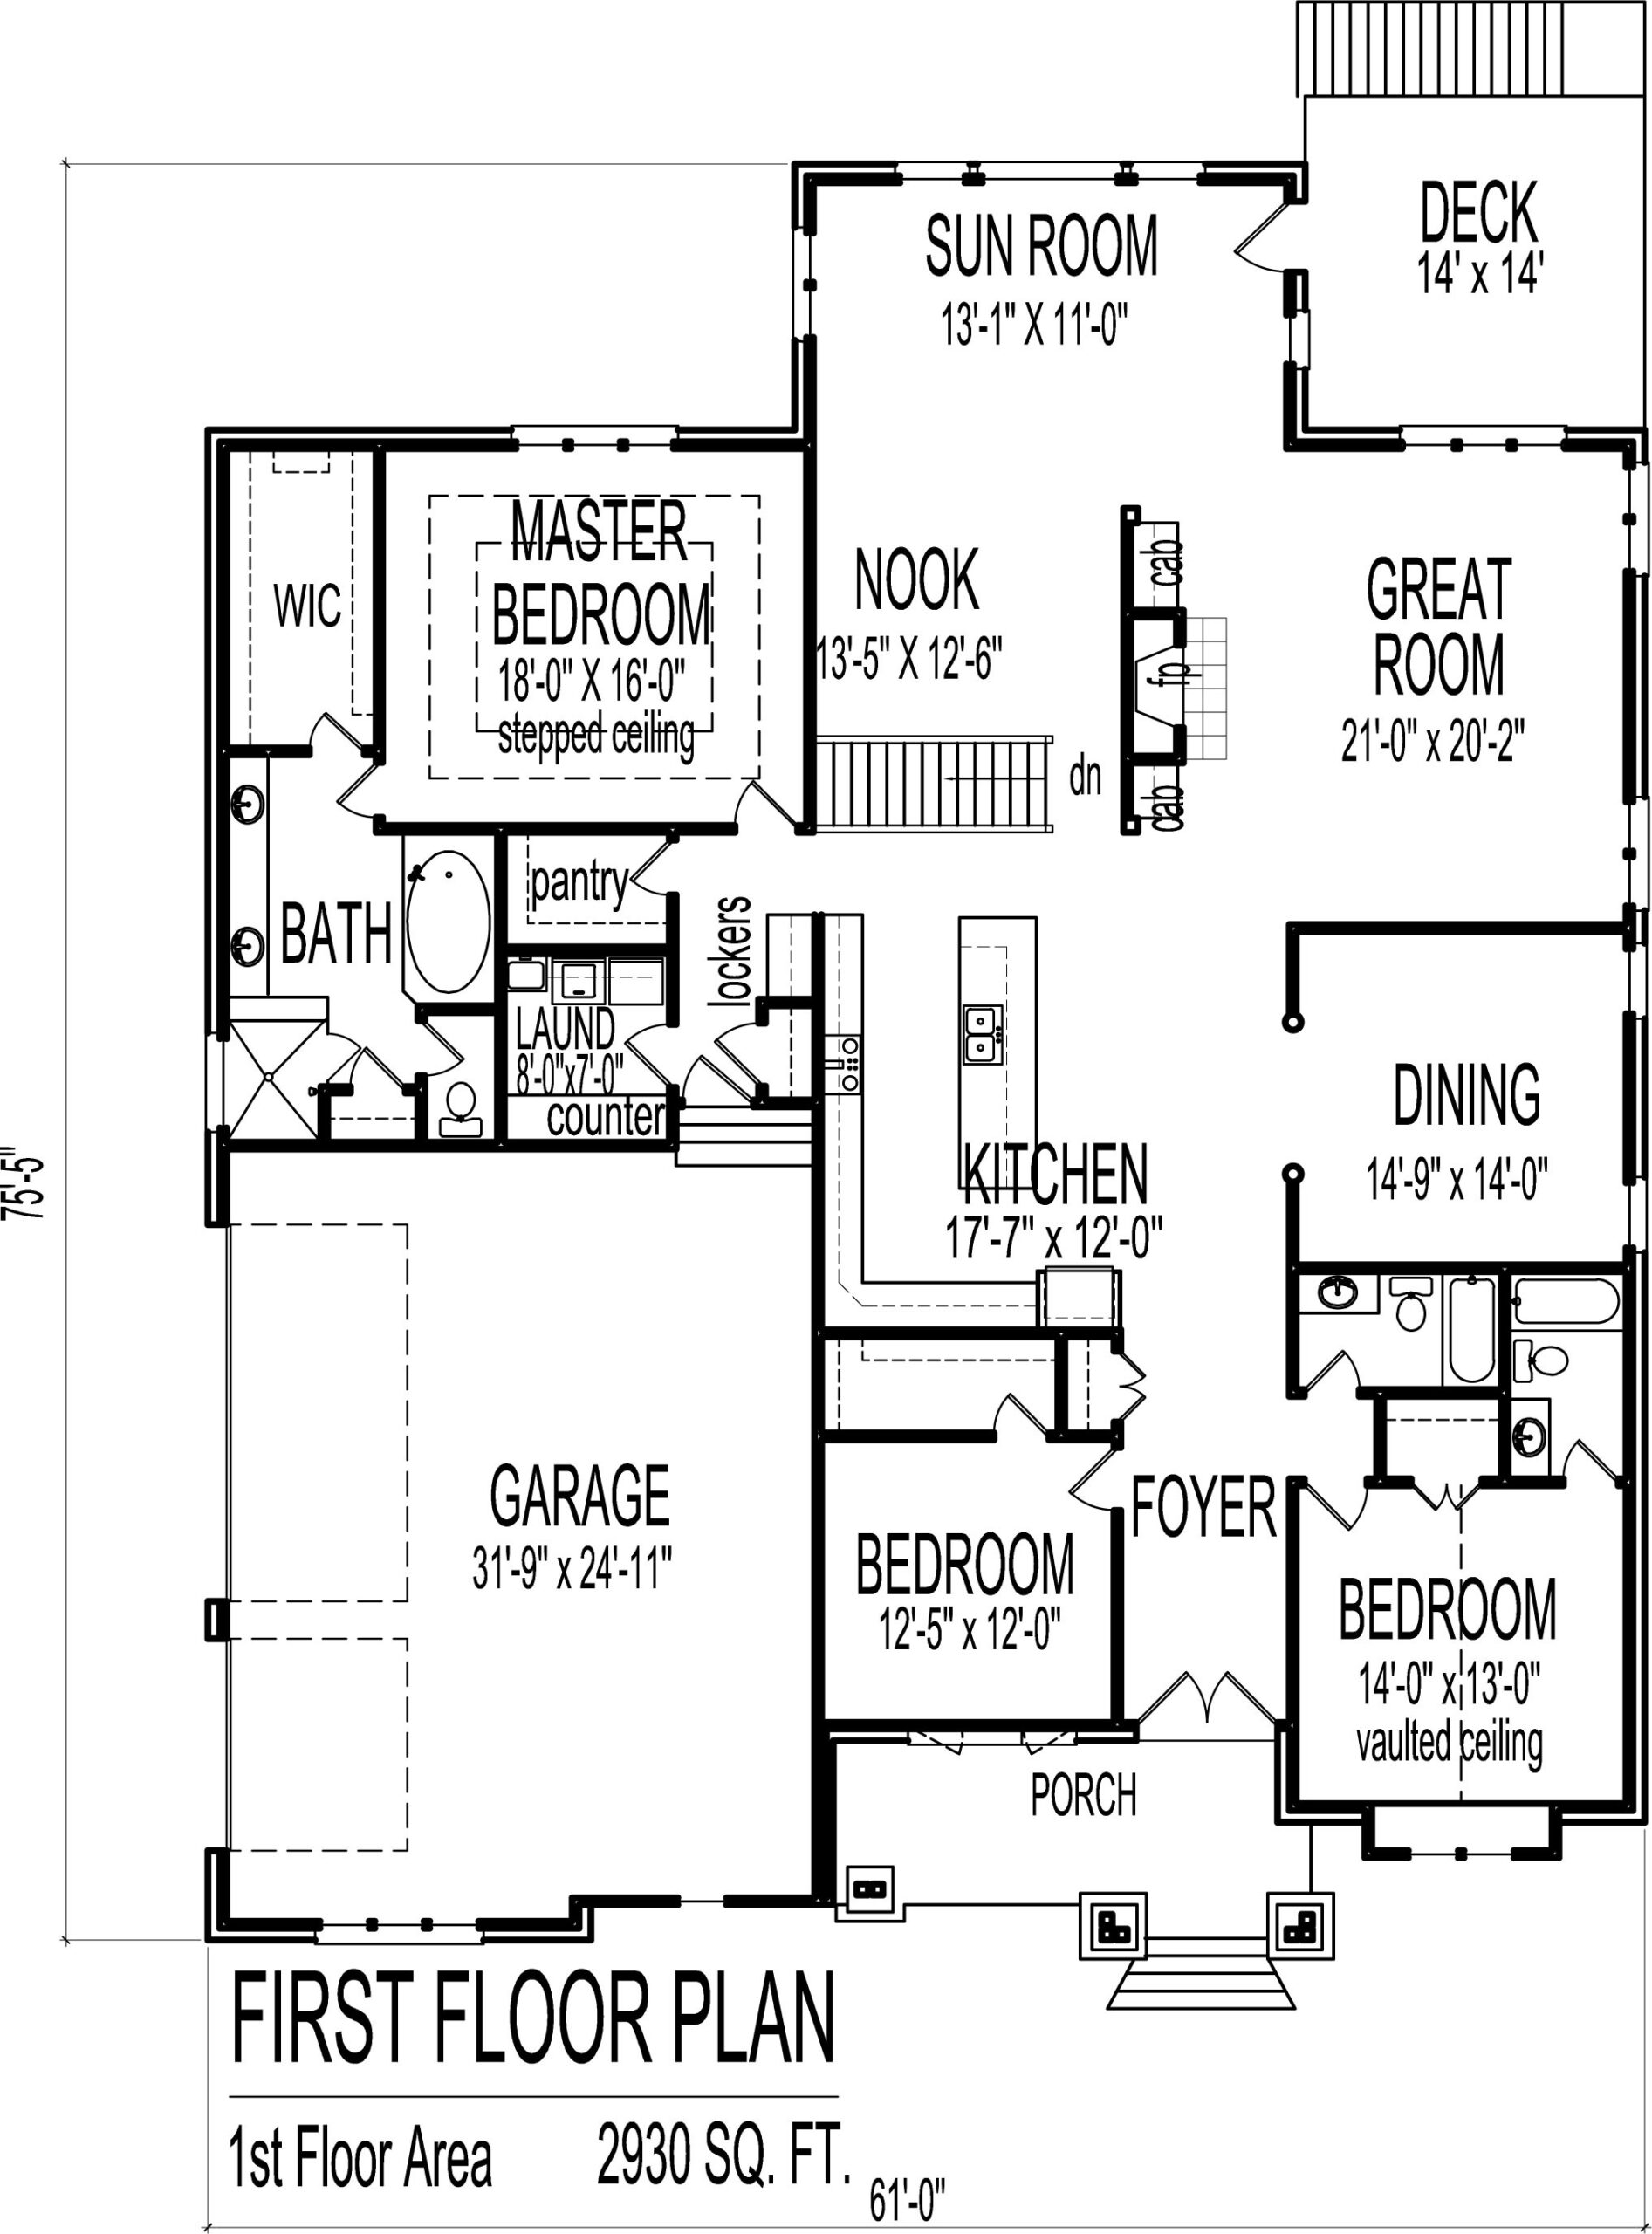 Popular plan elevation section drawing at getdrawings | free download regarding fascinating sketch house plans